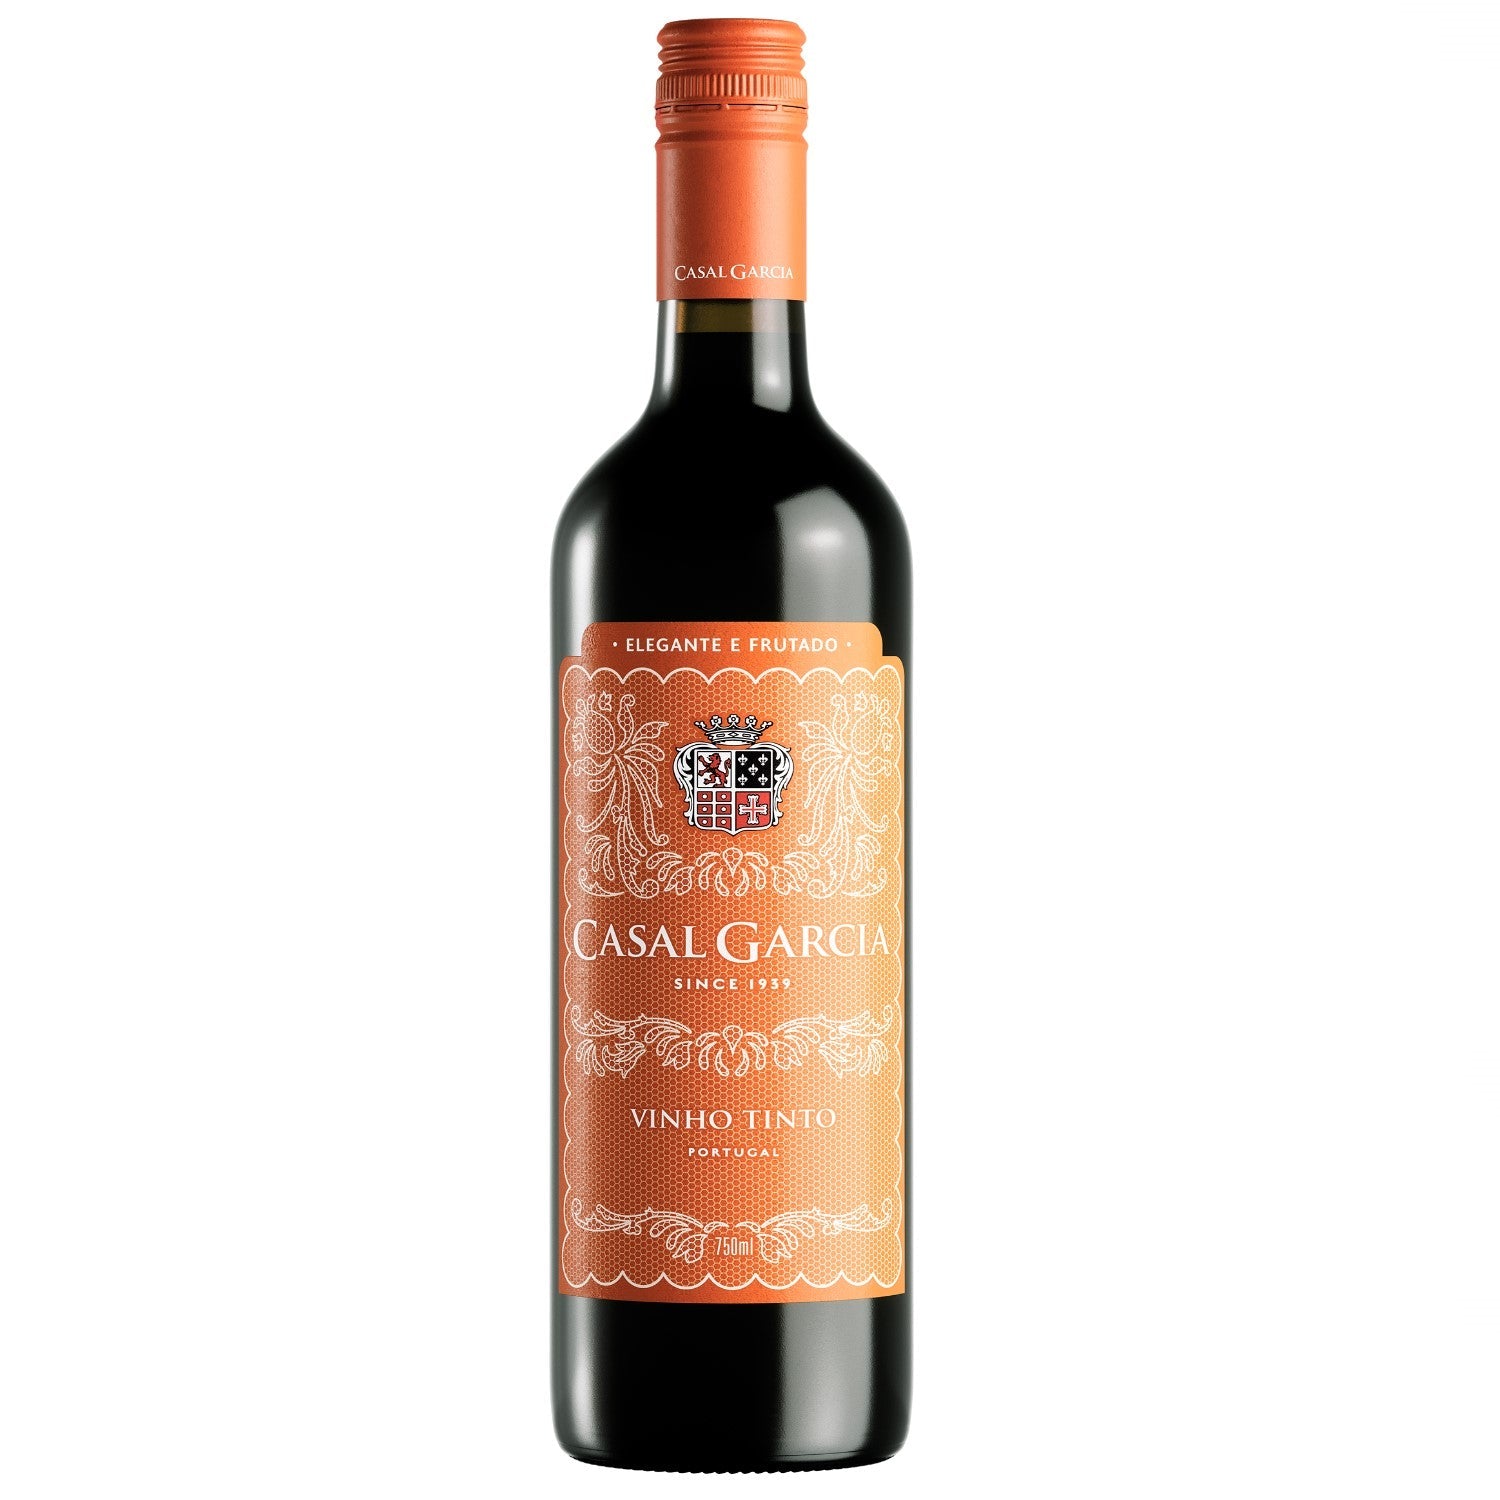 Casal Garcia Vinho Tinto IG Lisboa Rotwein Wein trocken Portugal (3 x 0.75l) - Versanel -